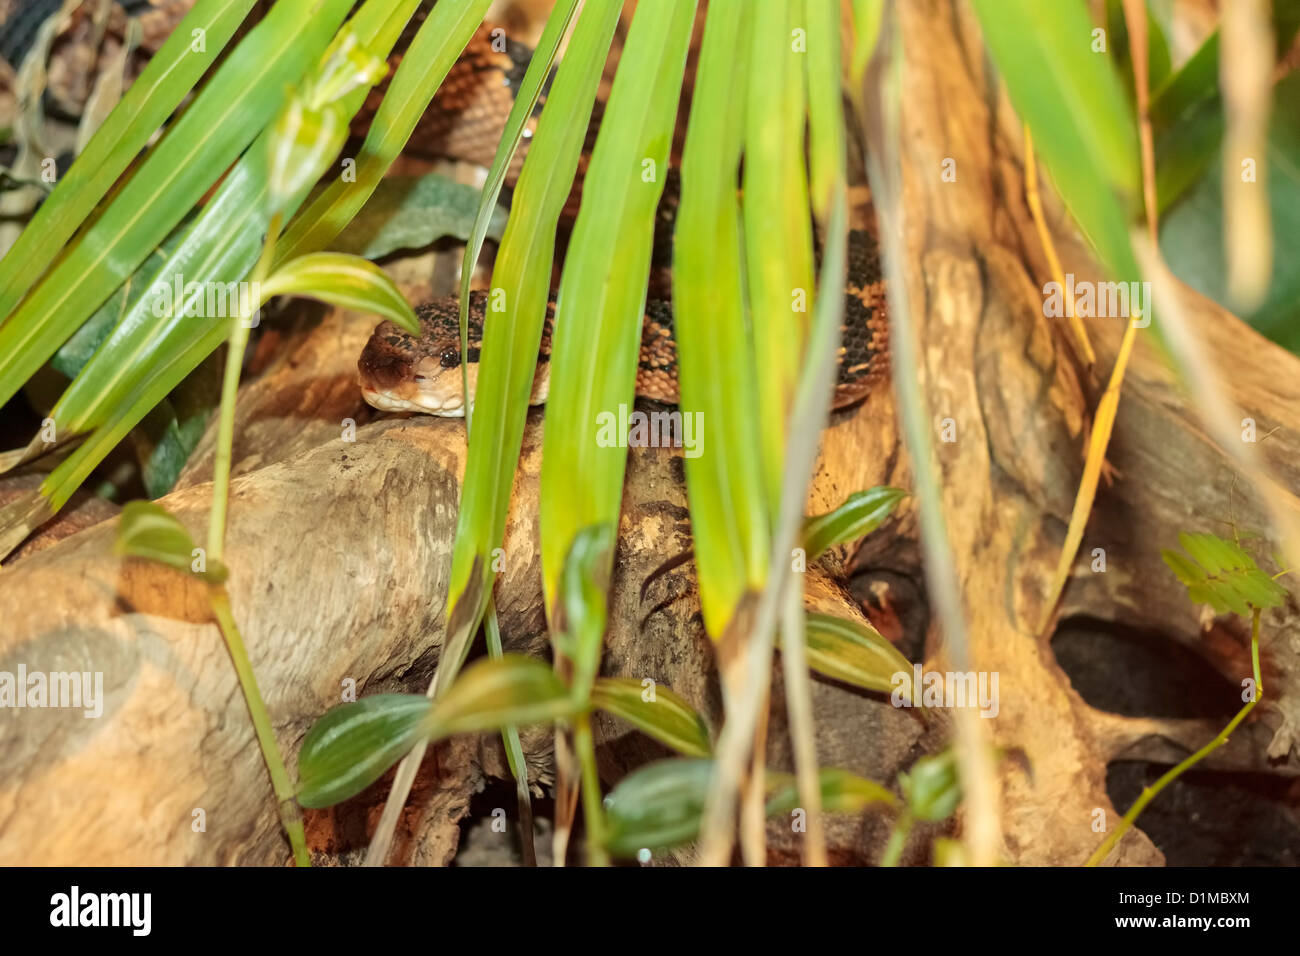 South American Bushmaster snake (Lachesis muta) hiding behind a palm leave,  Randers Regnskov Zoo, Randers, Denmark Stock Photo